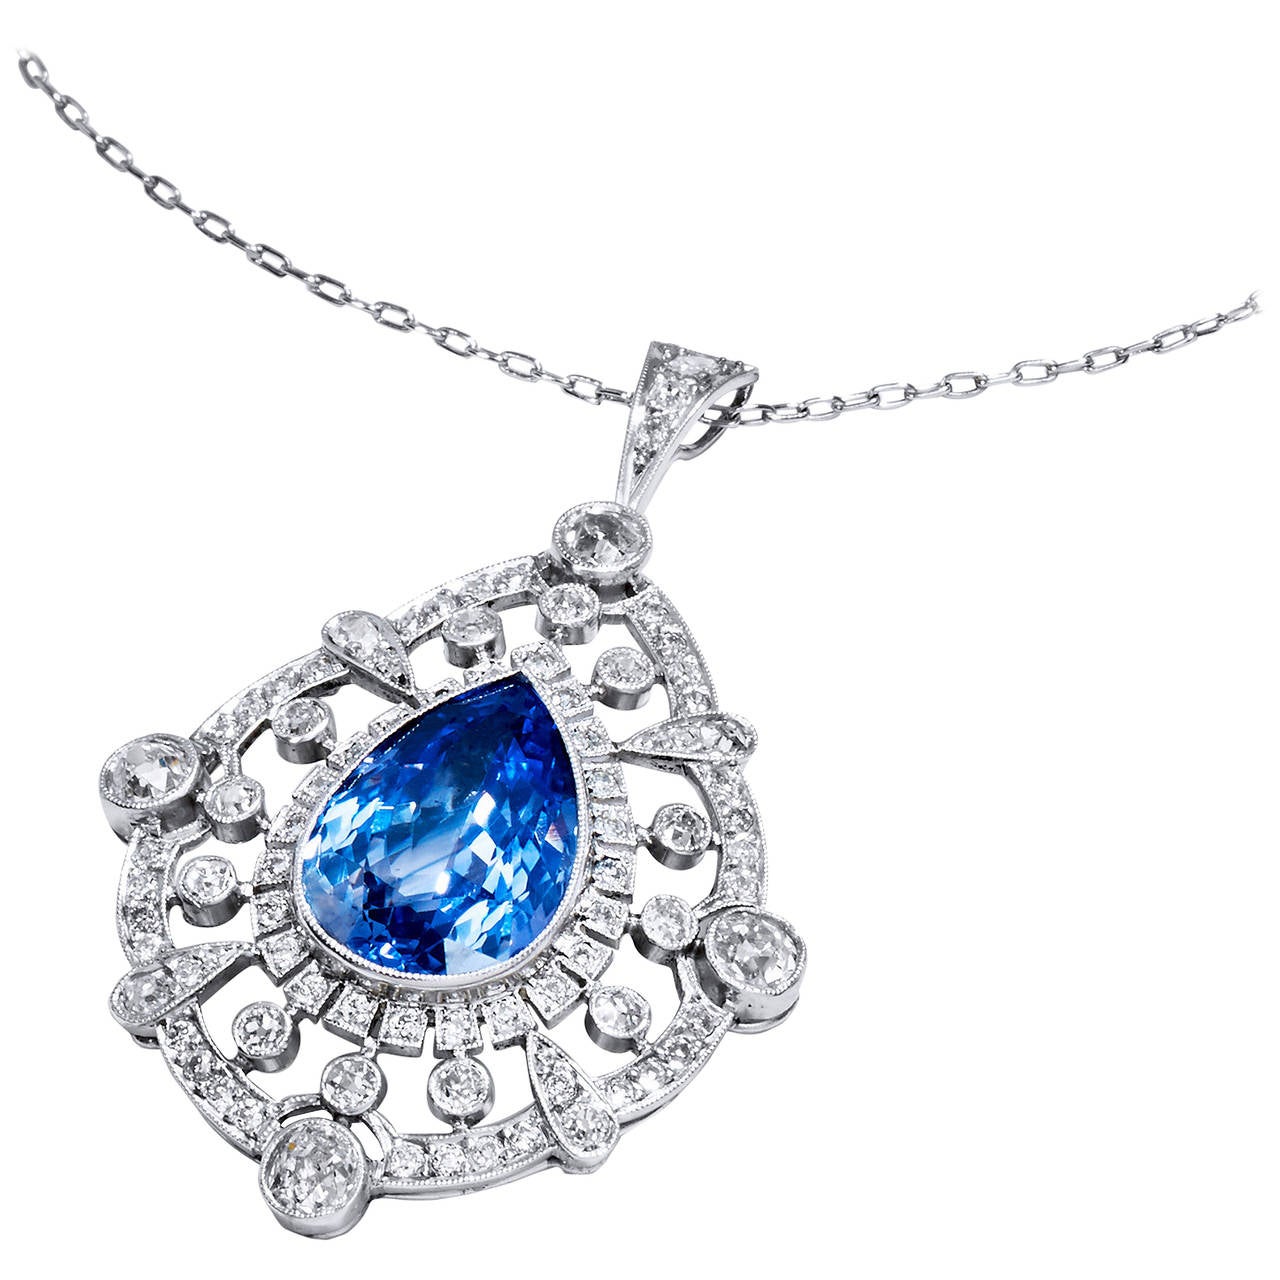 A.G.L. Certified 9.83 Carat Pear Shaped Sapphire & 3 ct Diamond Platinum Pendant